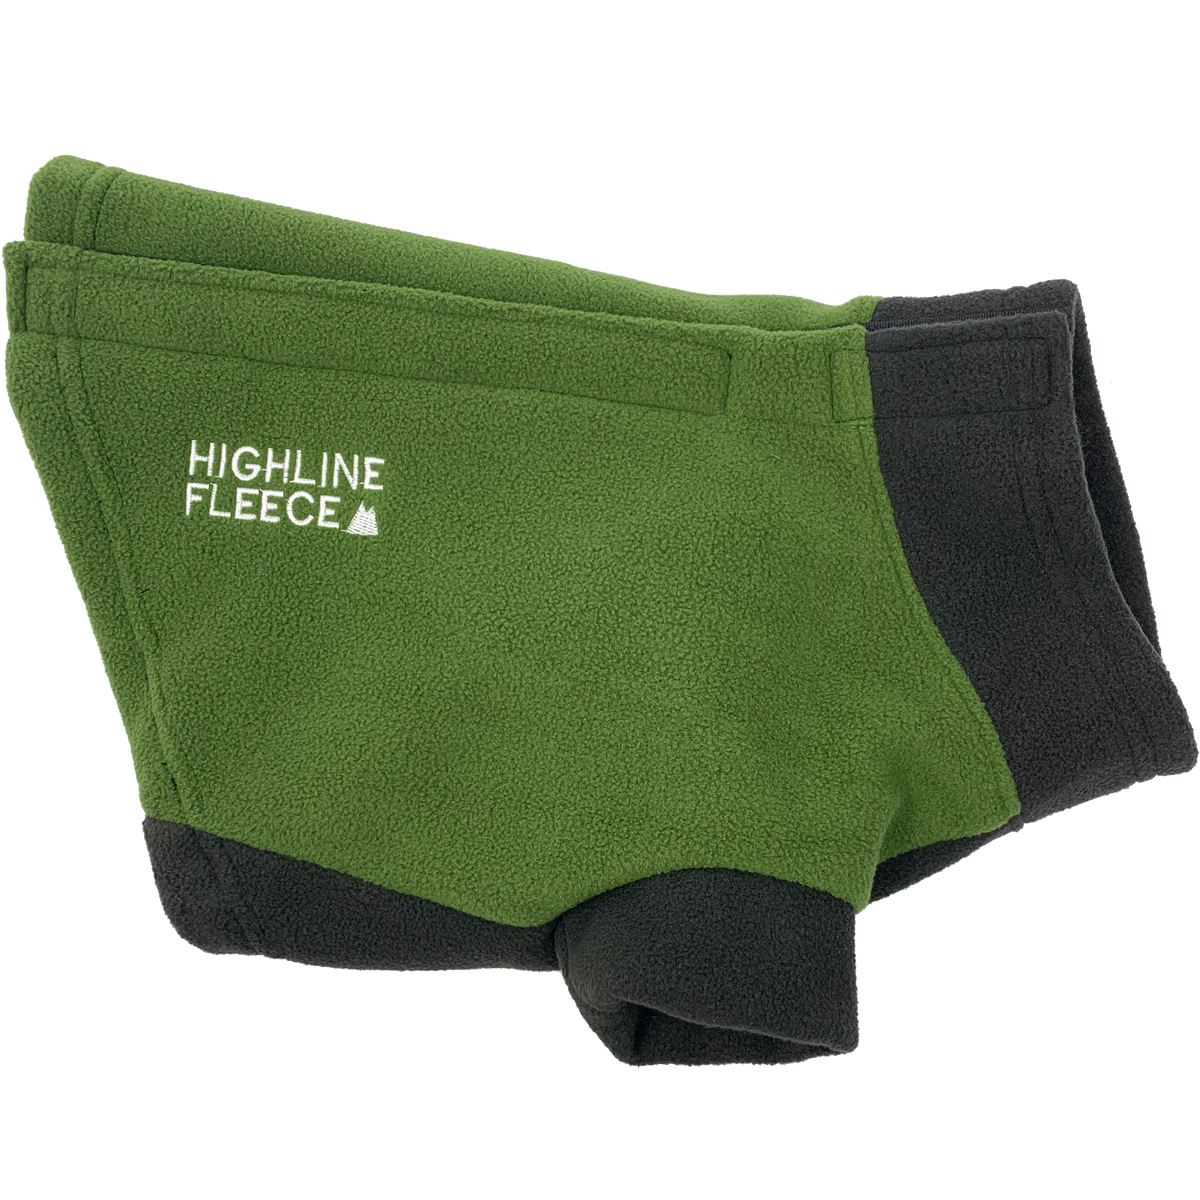 Highline Fleece Dog Coat - Two Tone Green